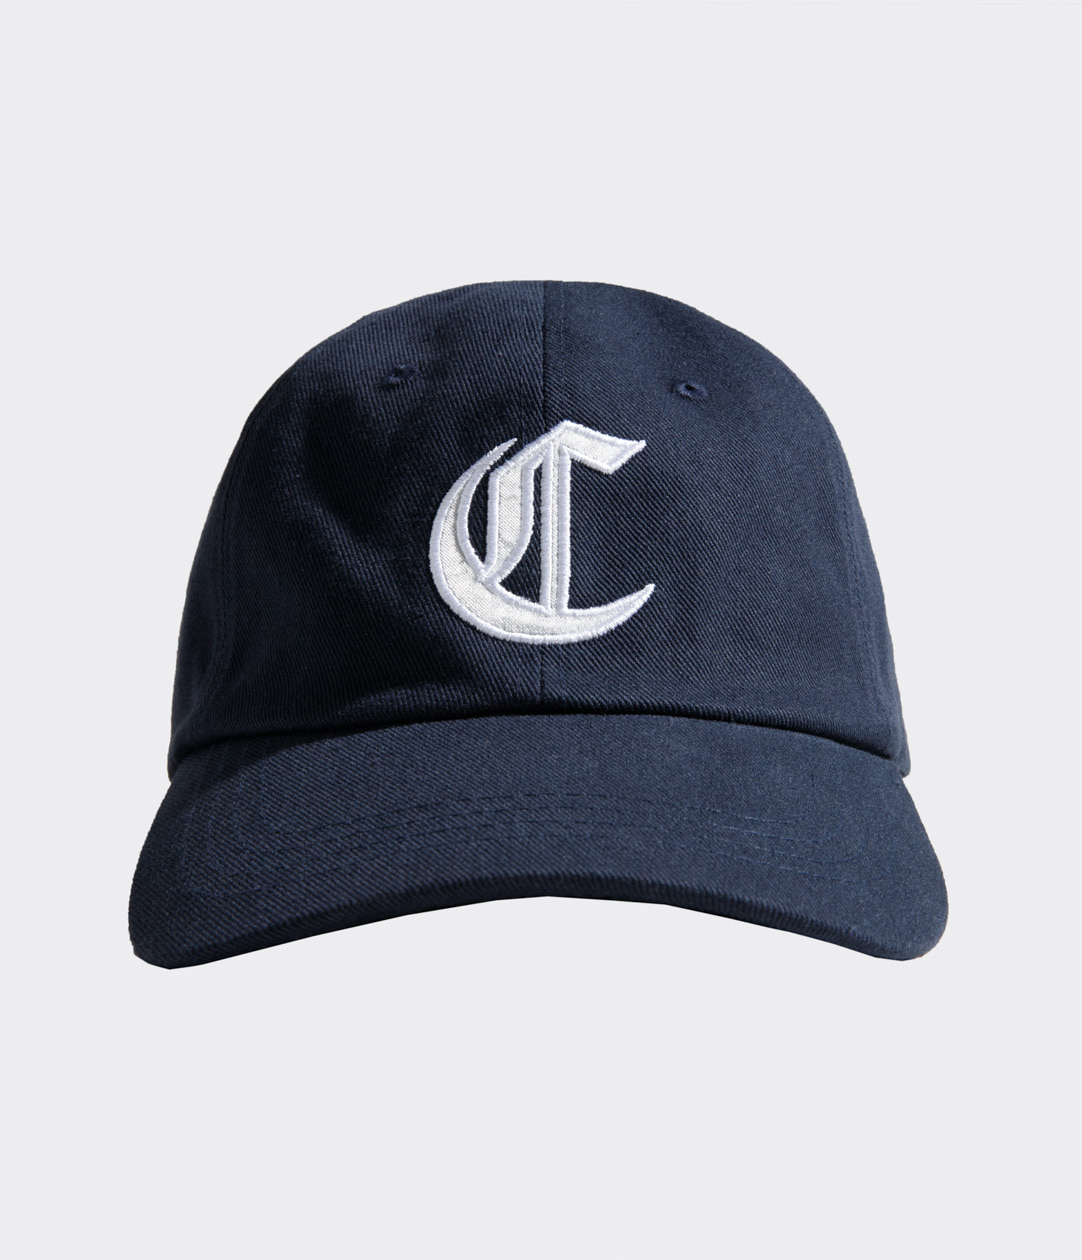 Calico Baseball Cap (Blackletter ver.)/ Dark Navy